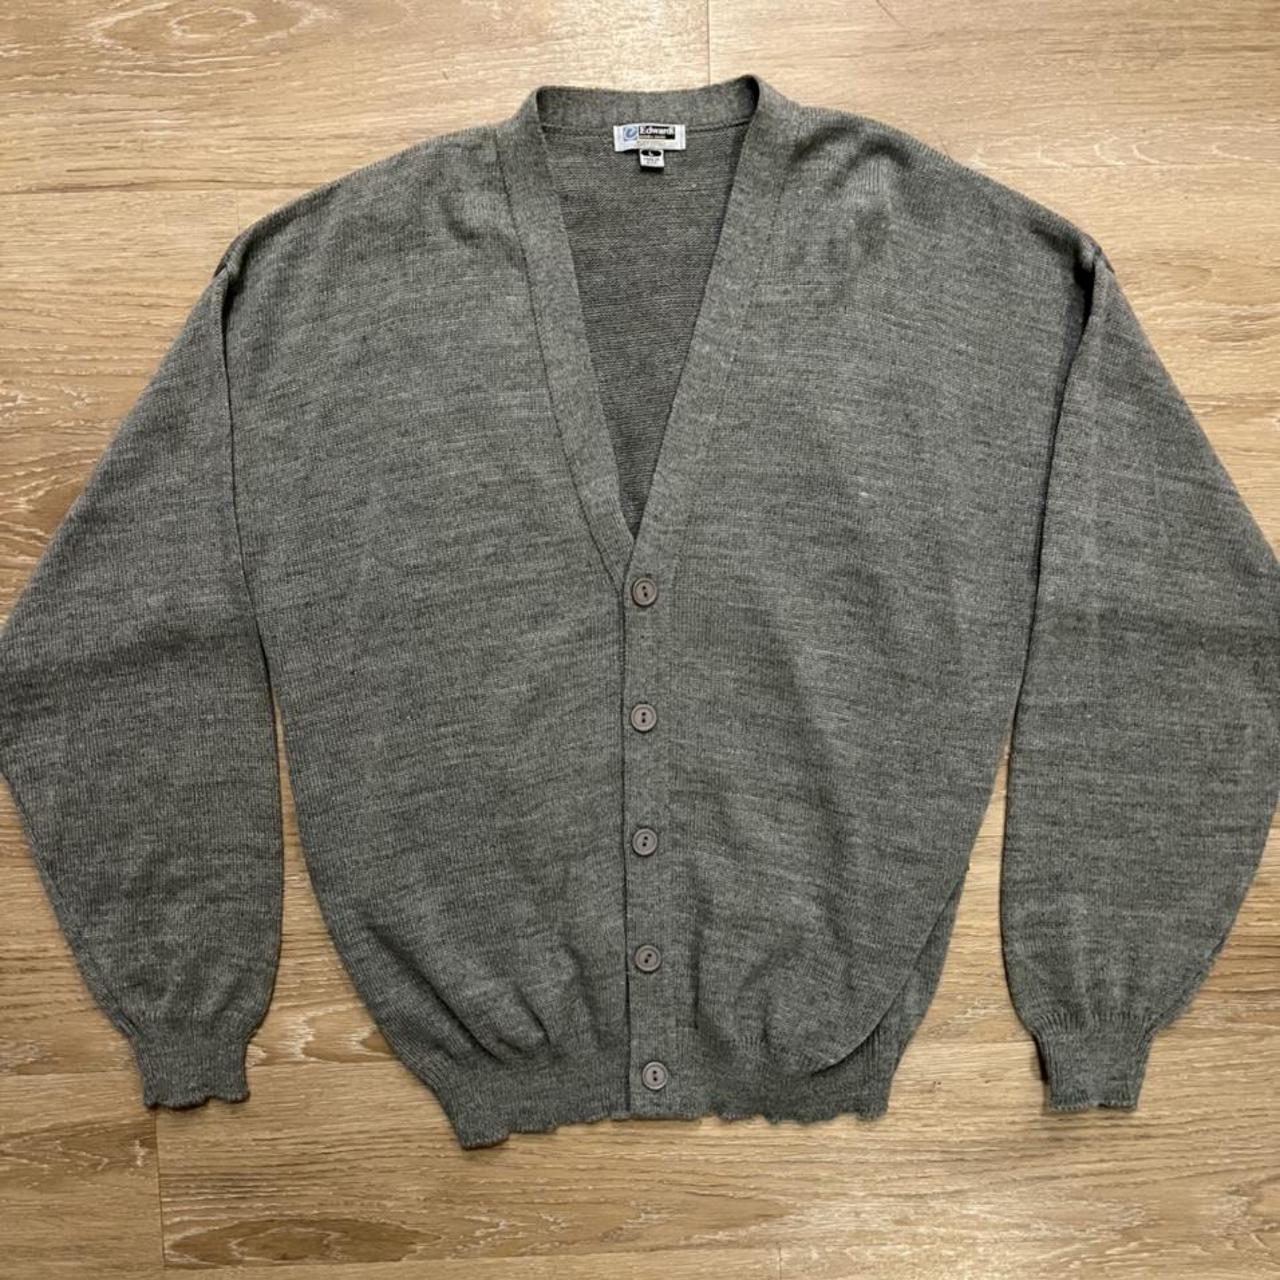 Vintage Men’s Wool Cardigan Sweater - Size L. Made... - Depop